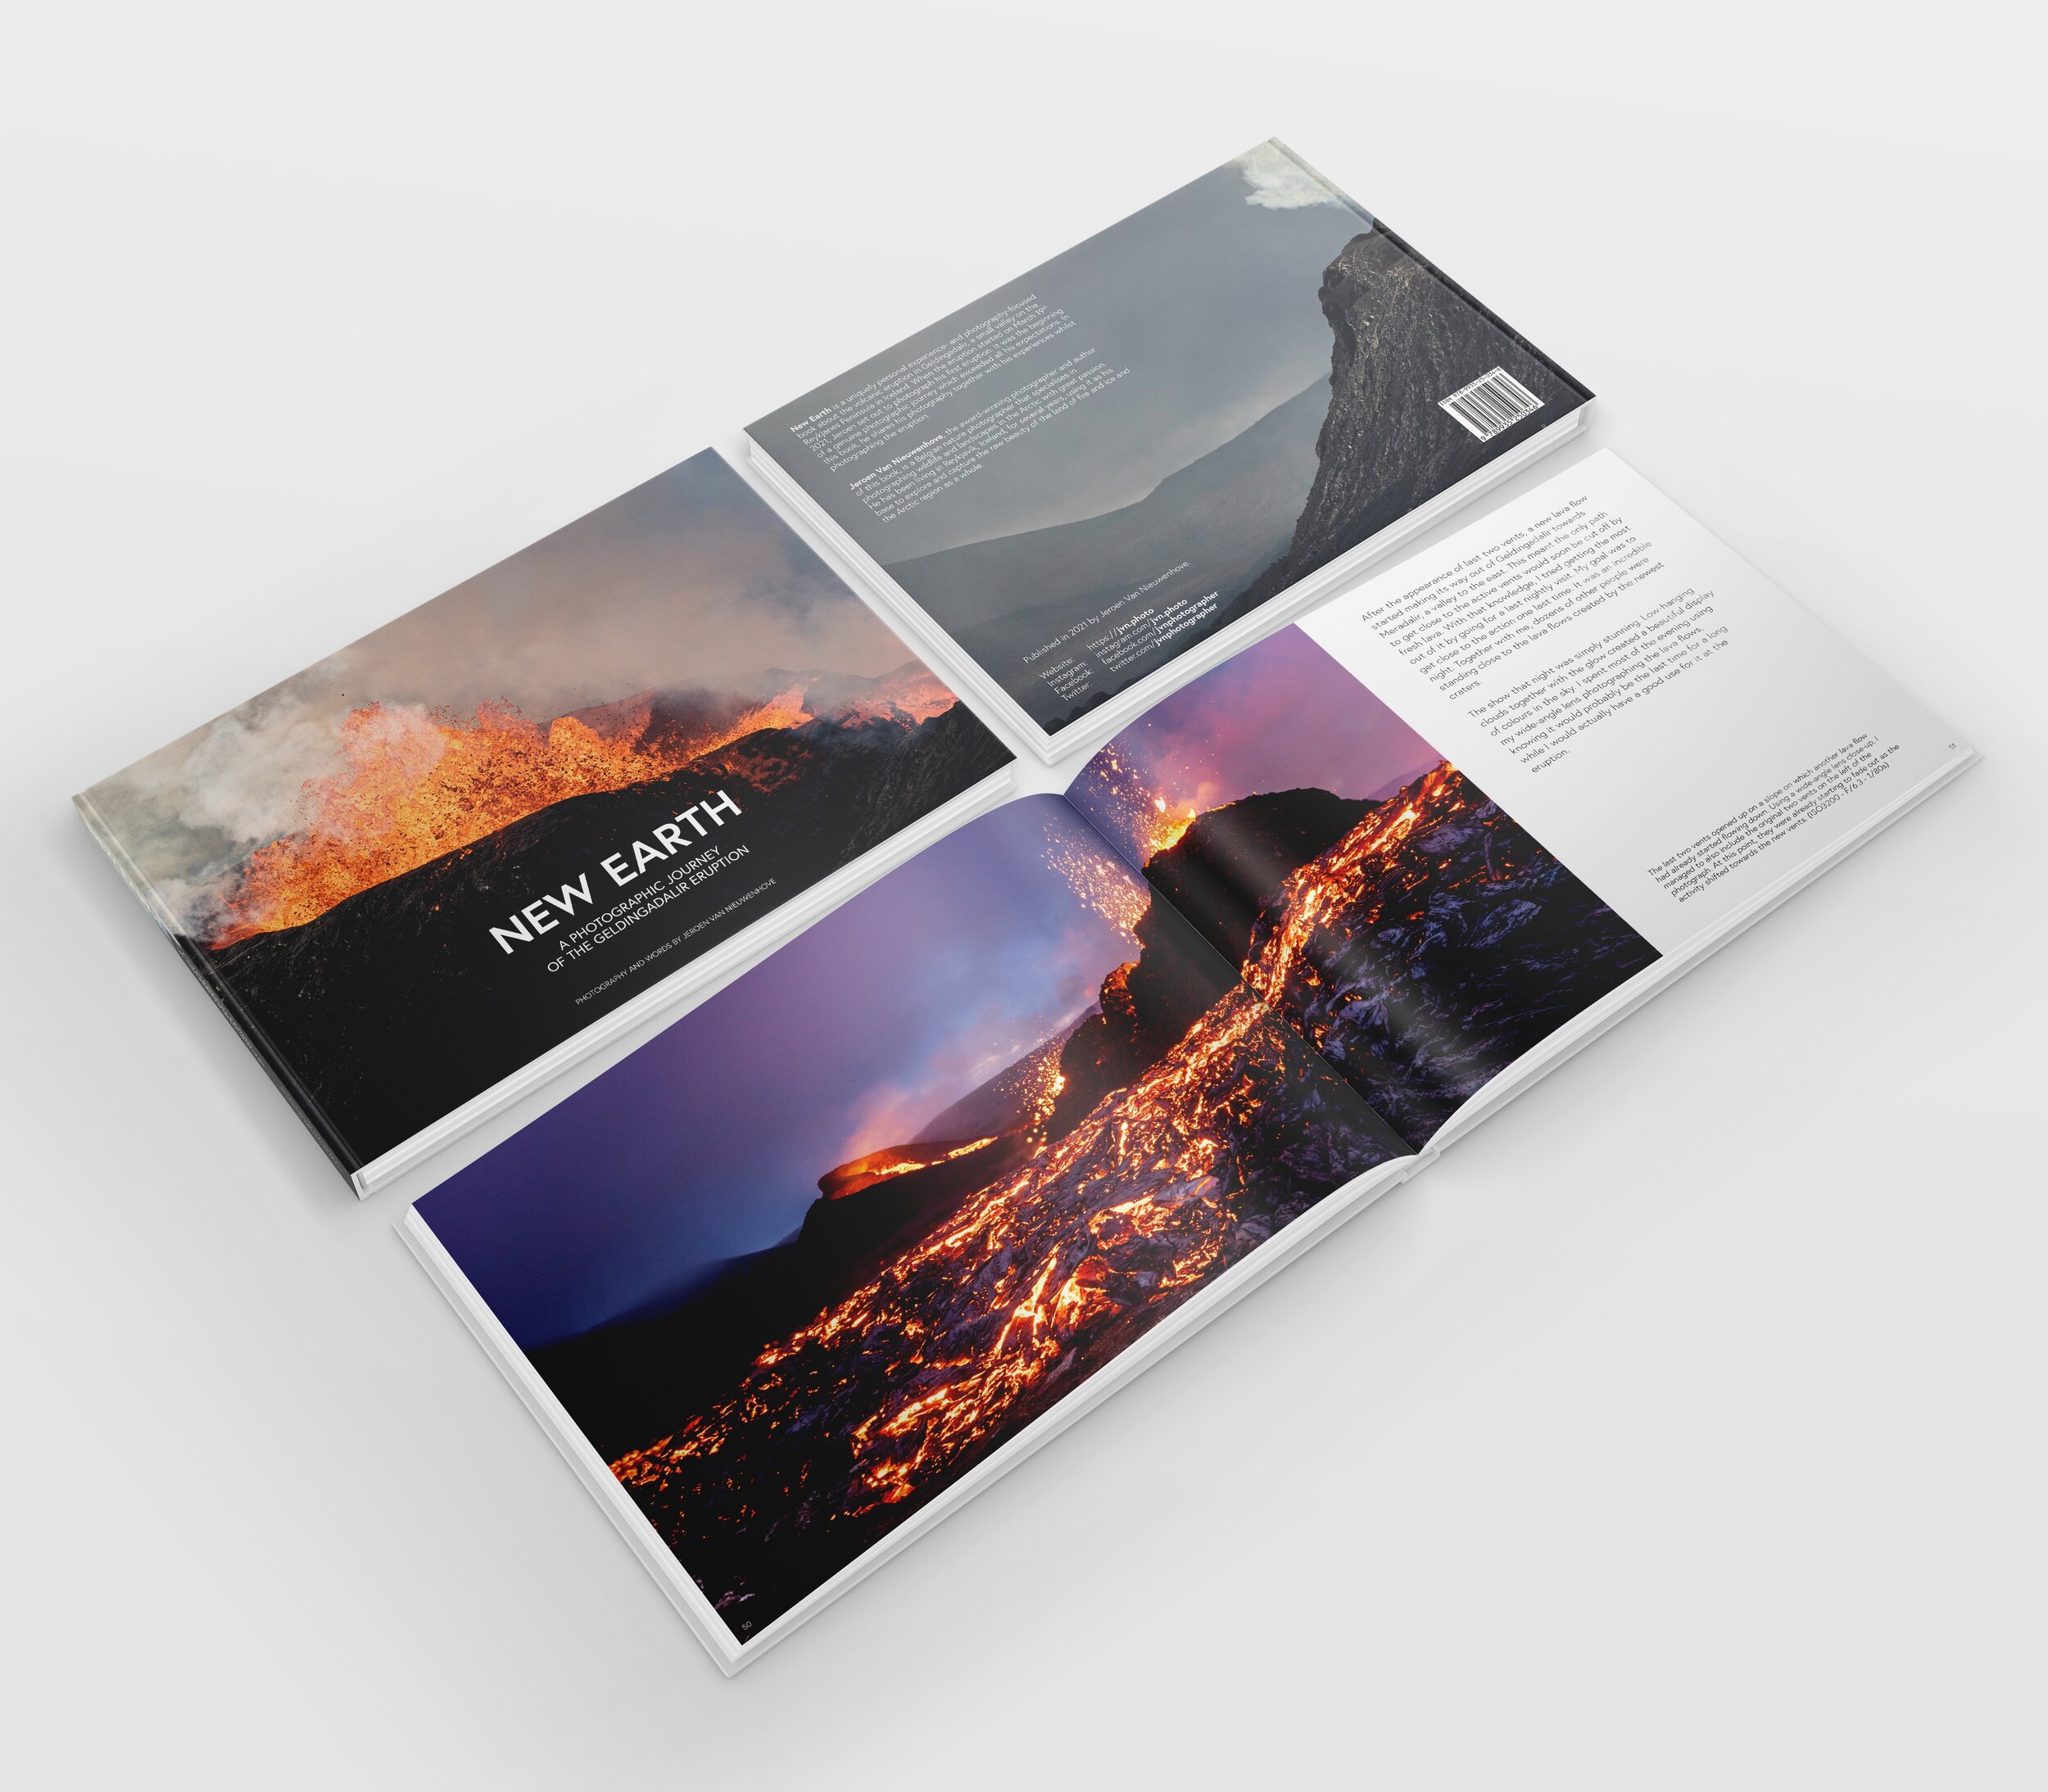 New Earth – a Photographic Journey of the Geldingadalir Eruption